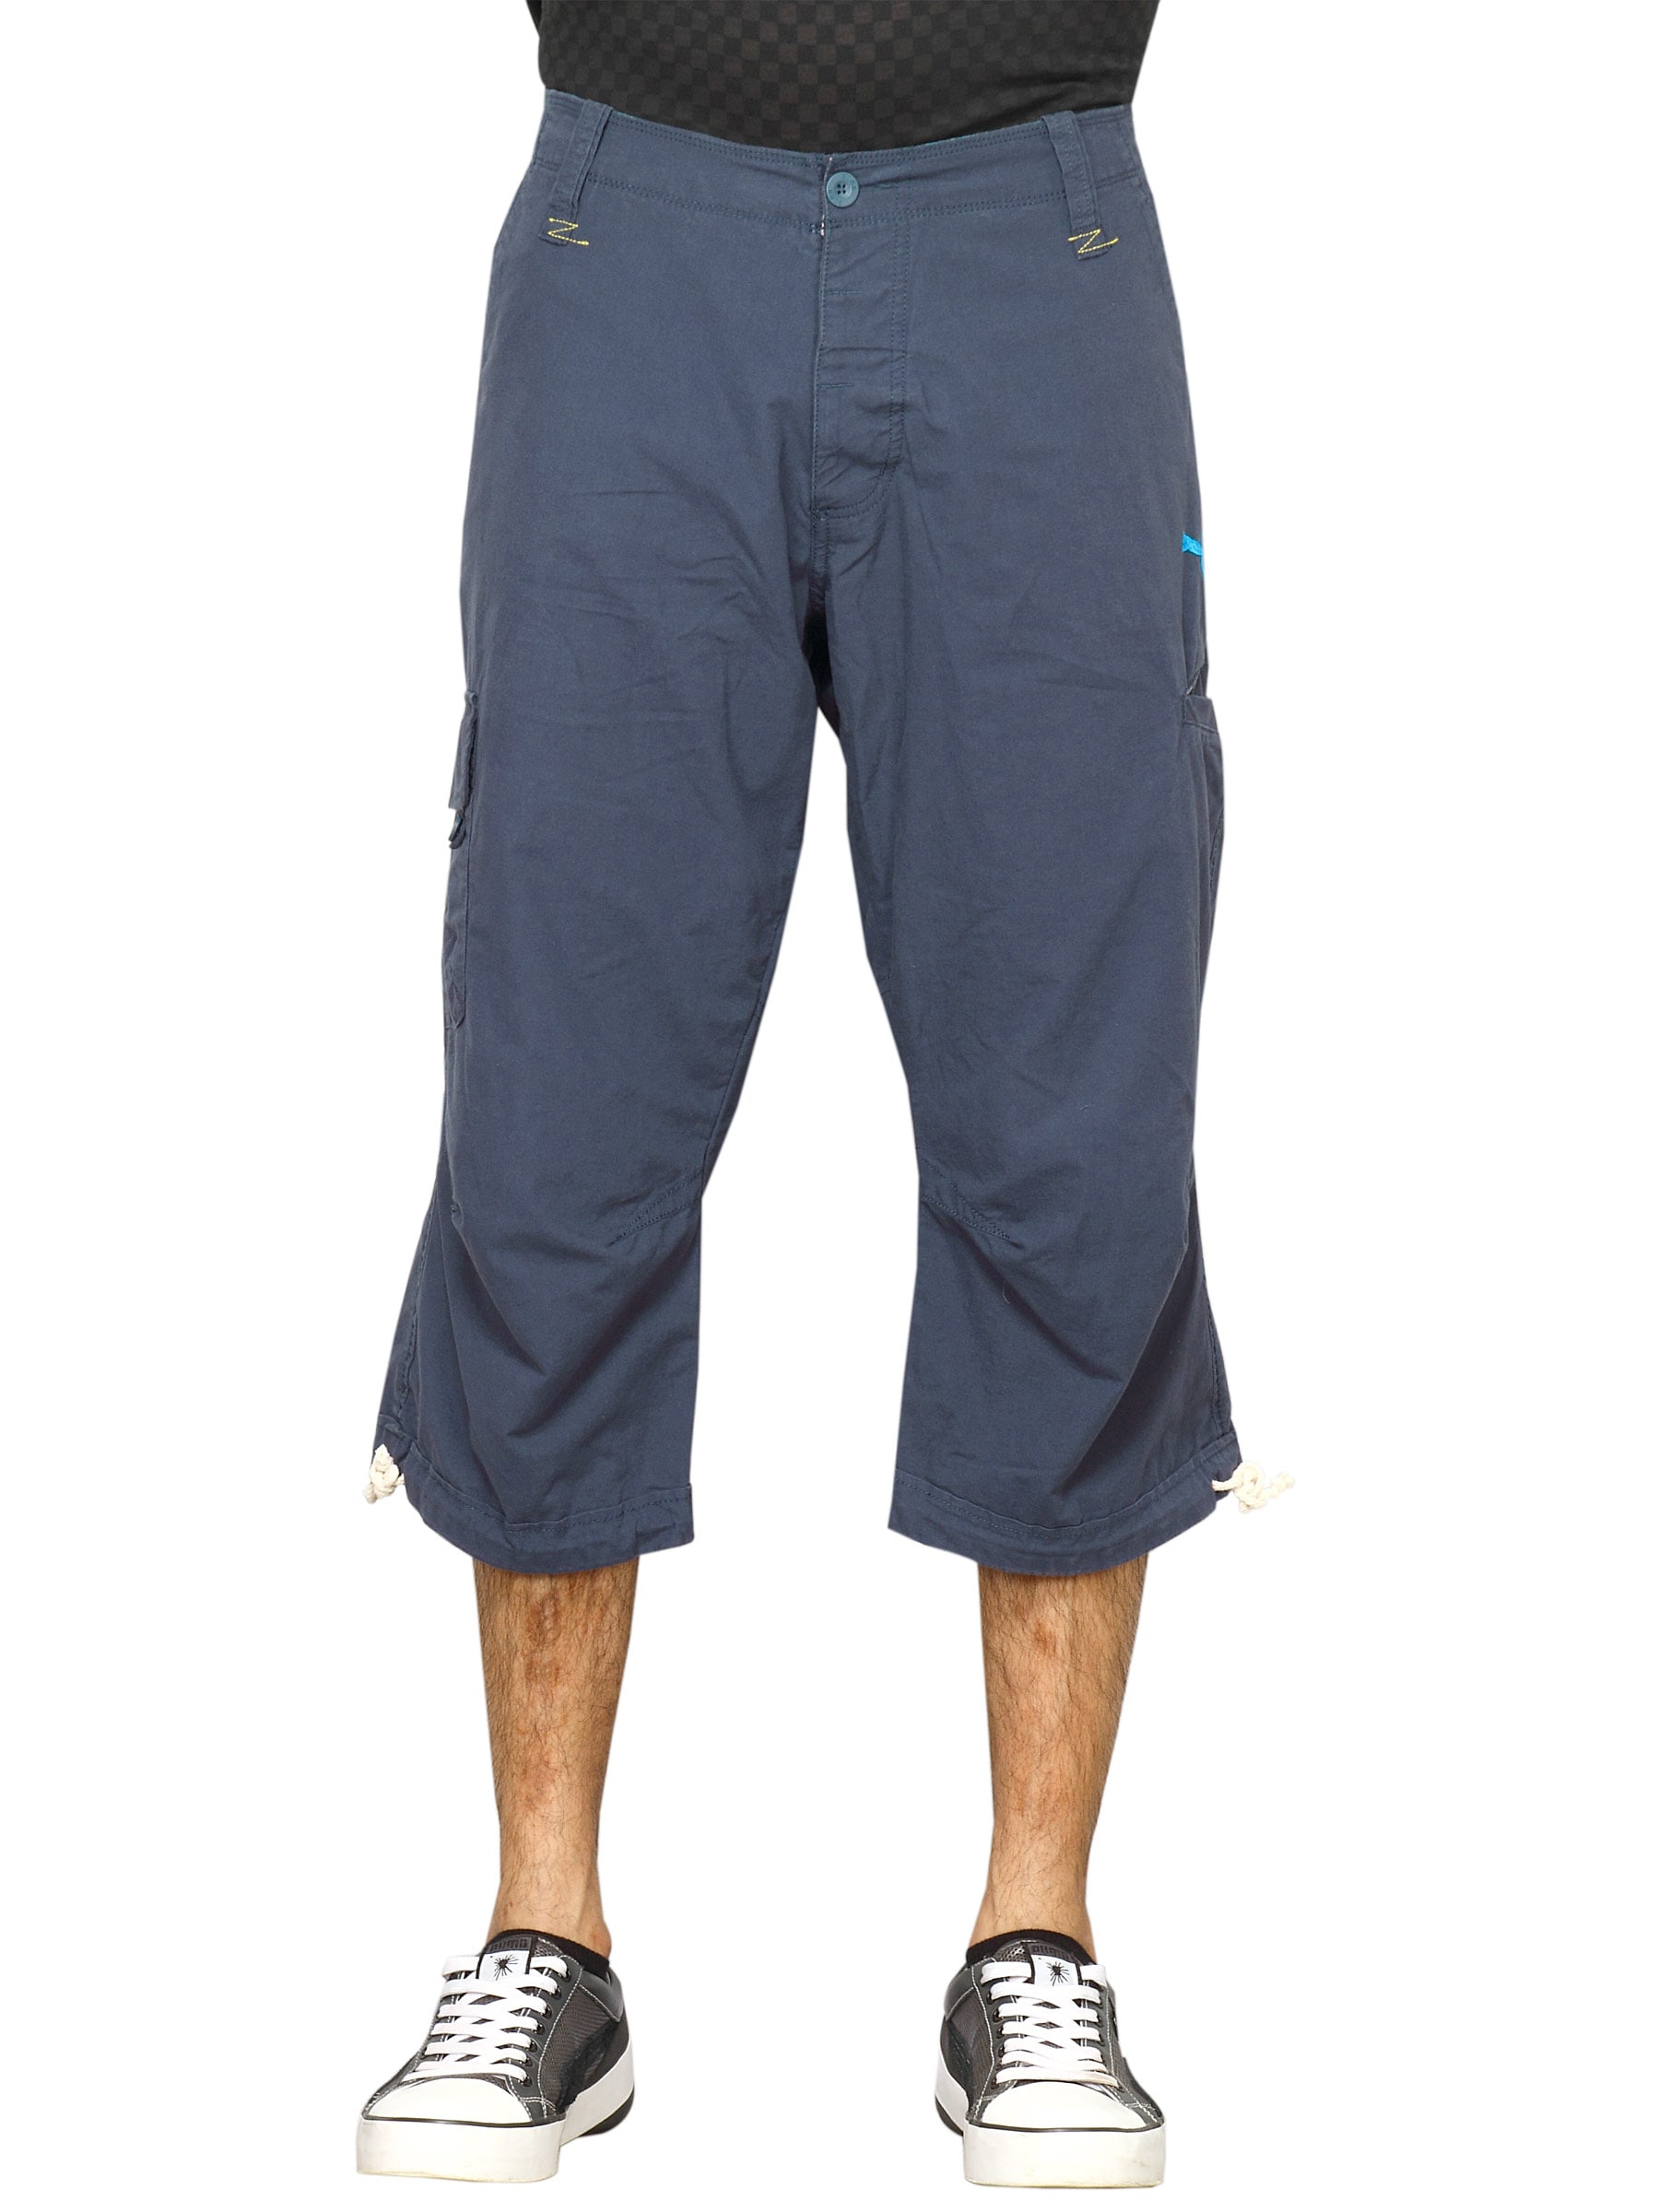 Puma Men Pants Navy Blue Shorts